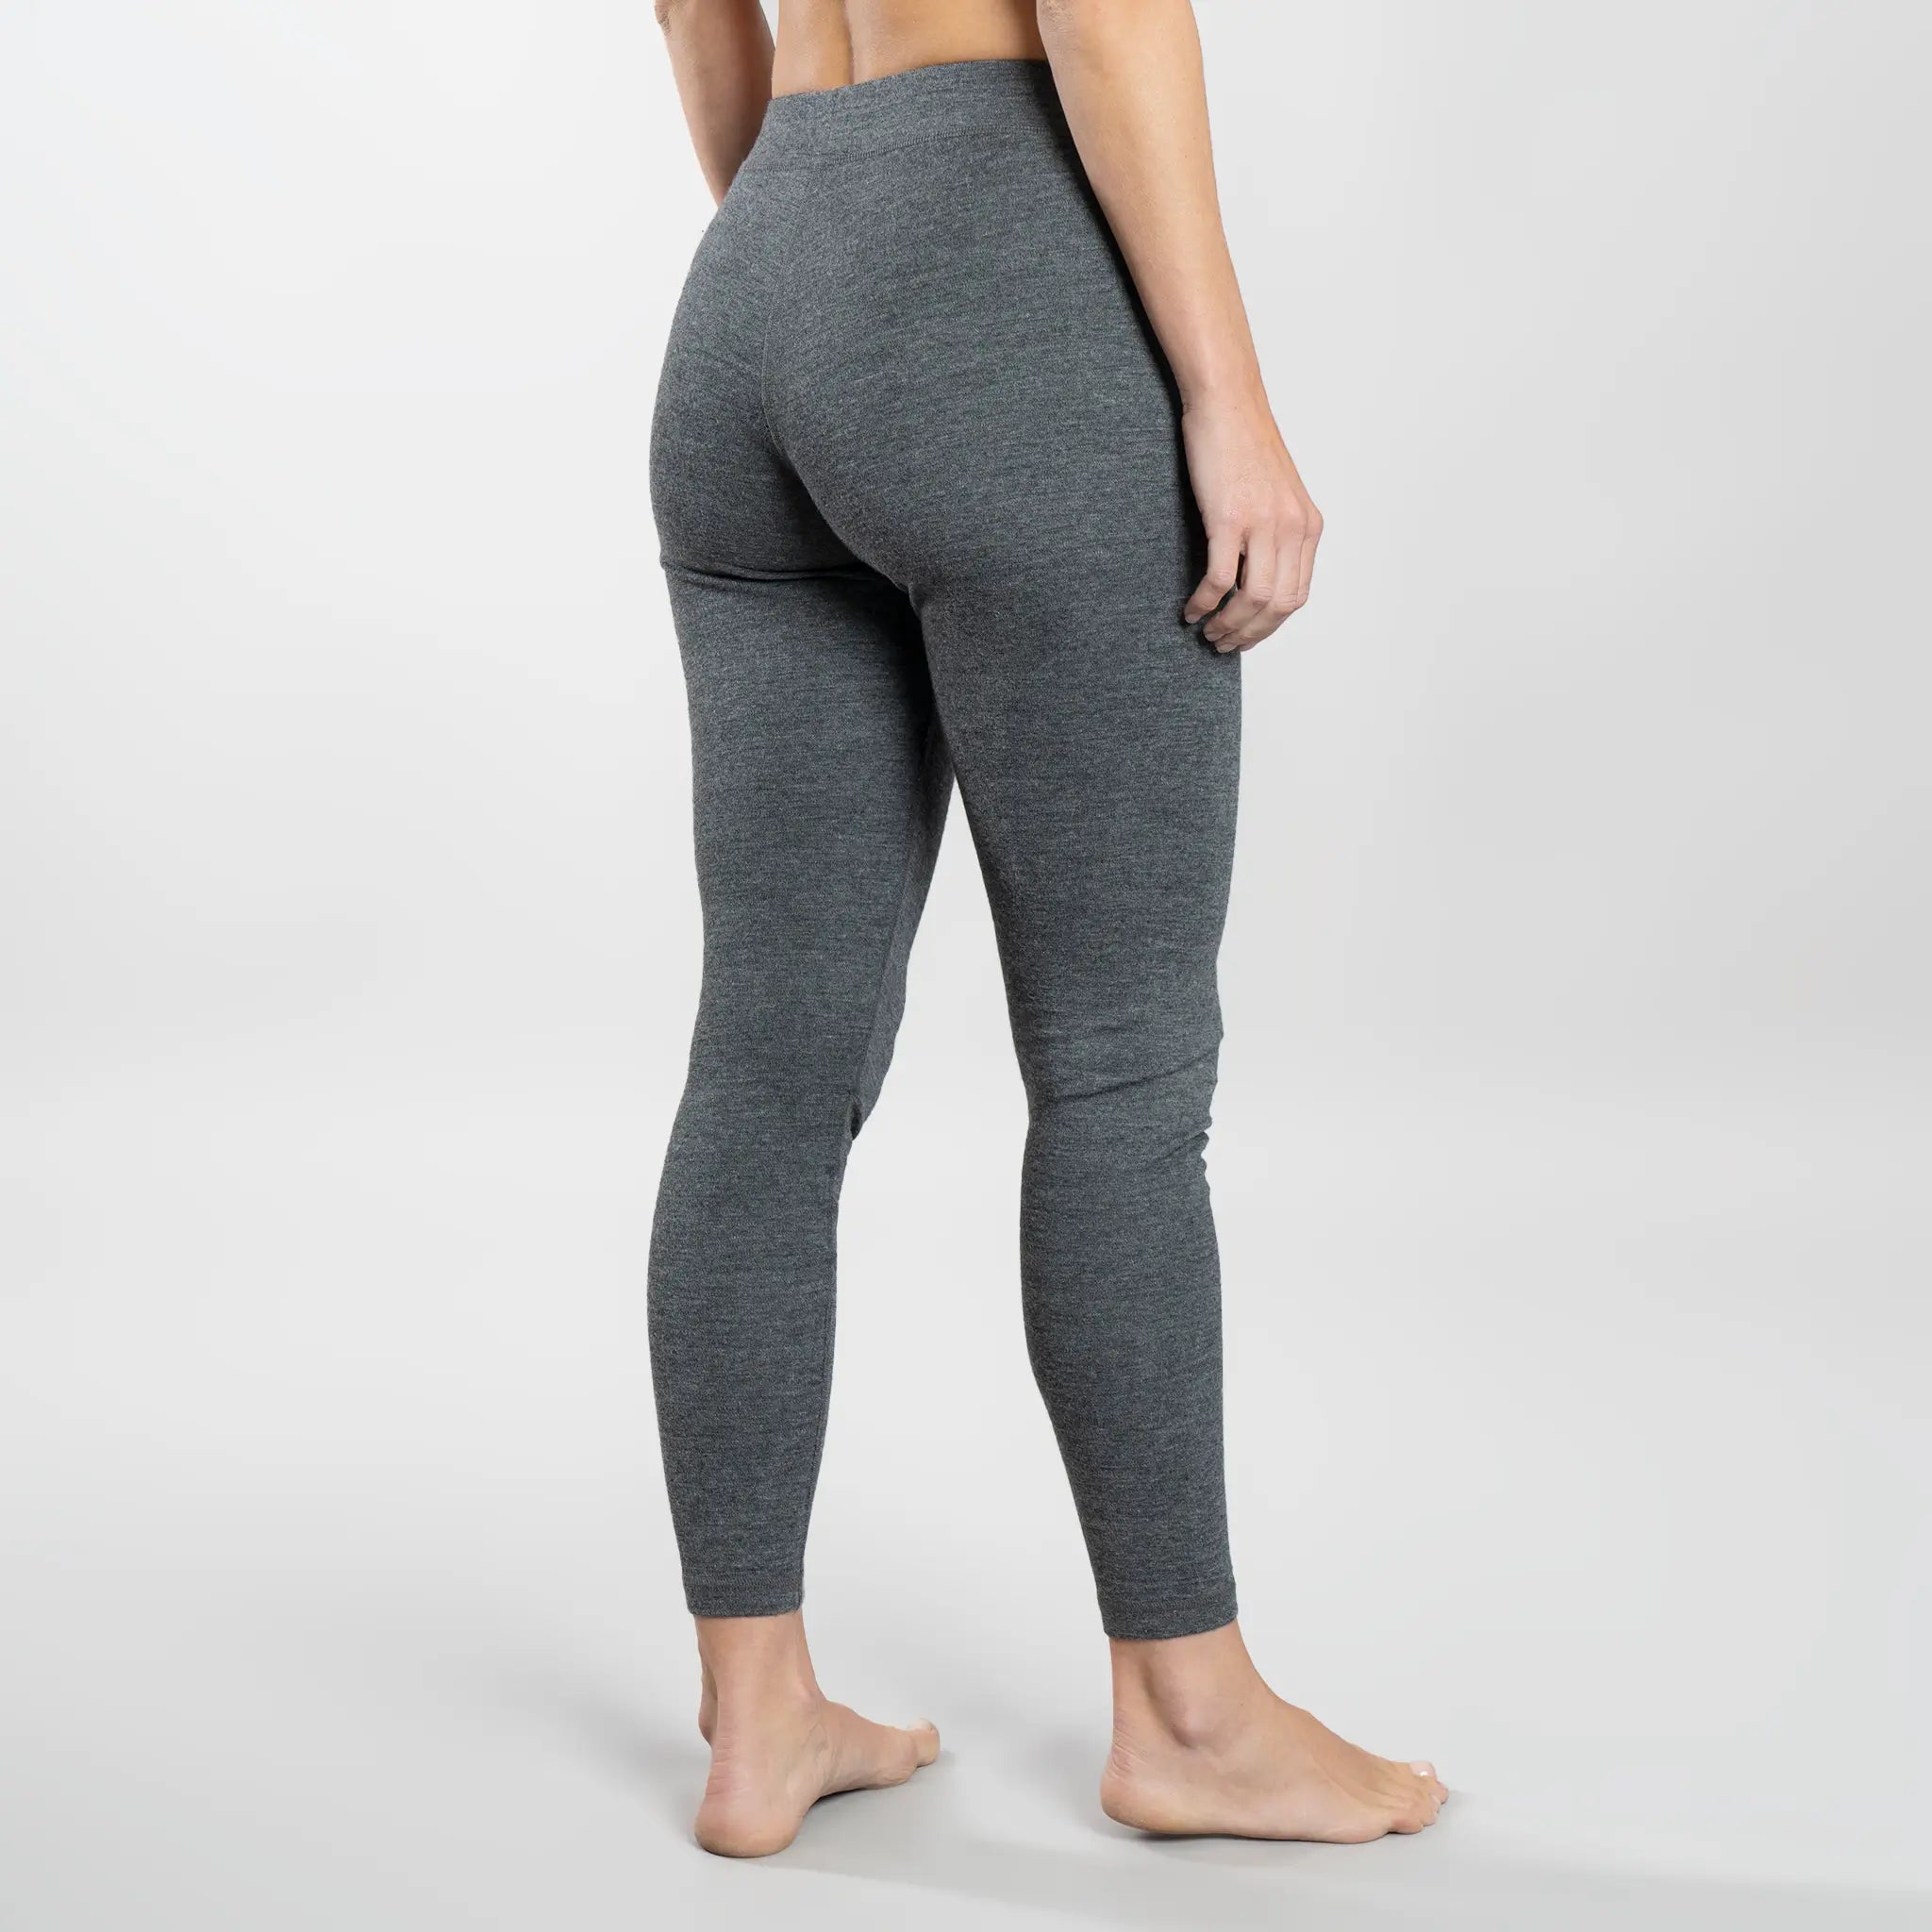 Women's Alpaca Wool Leggings: 300 Lightweight color gray